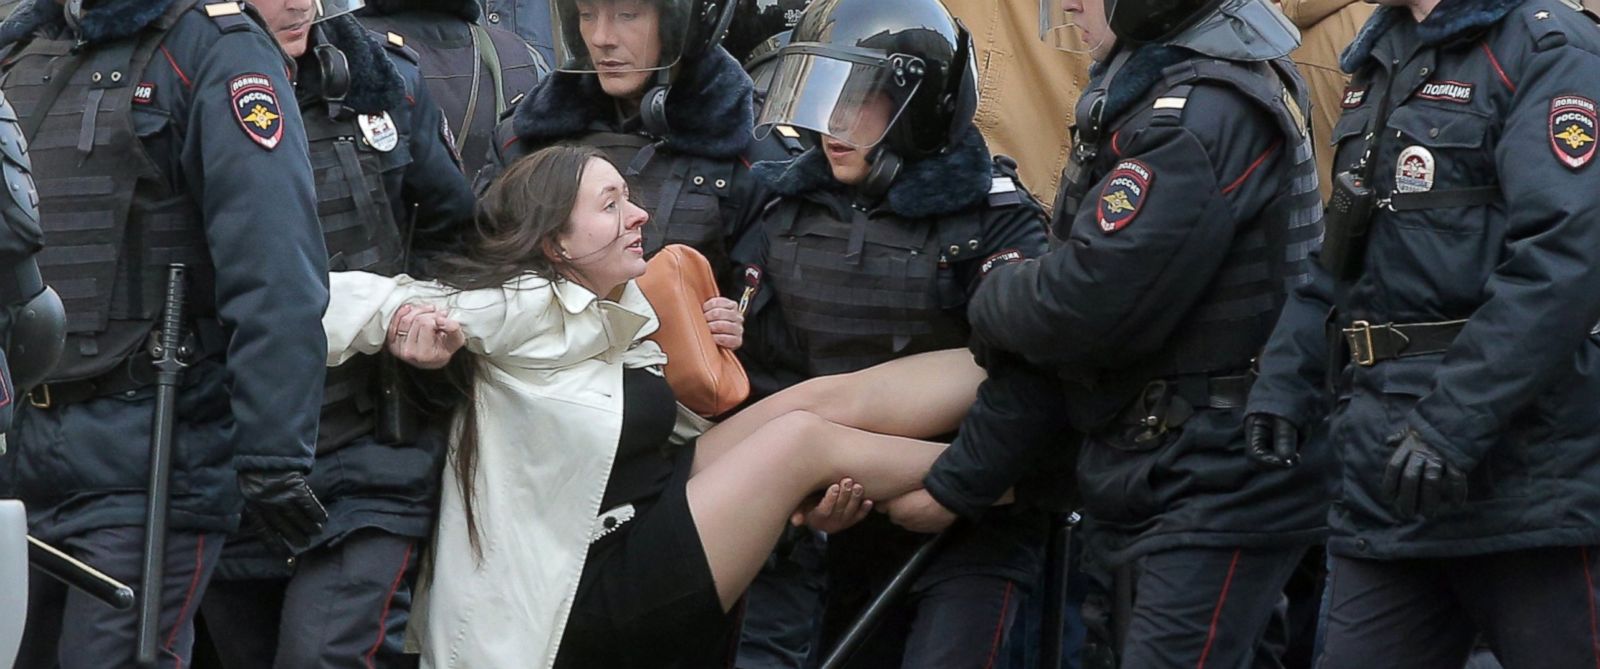 Фото со студенткой с протестного митинга в Москве 26 марта